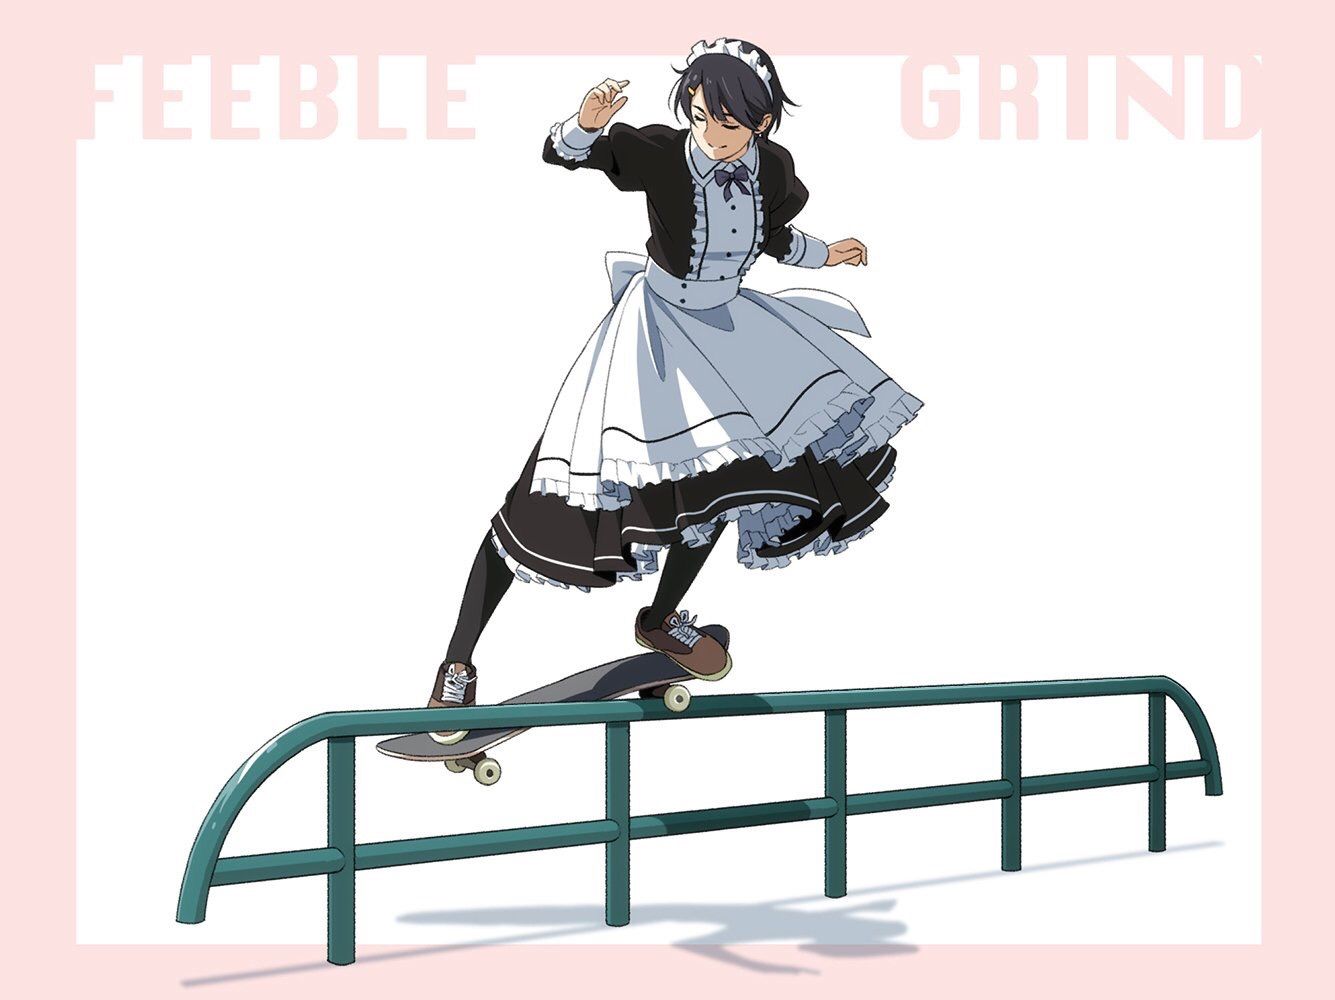 Anime Girl with Blue Hair Skateboard Sticker Print - wide 8